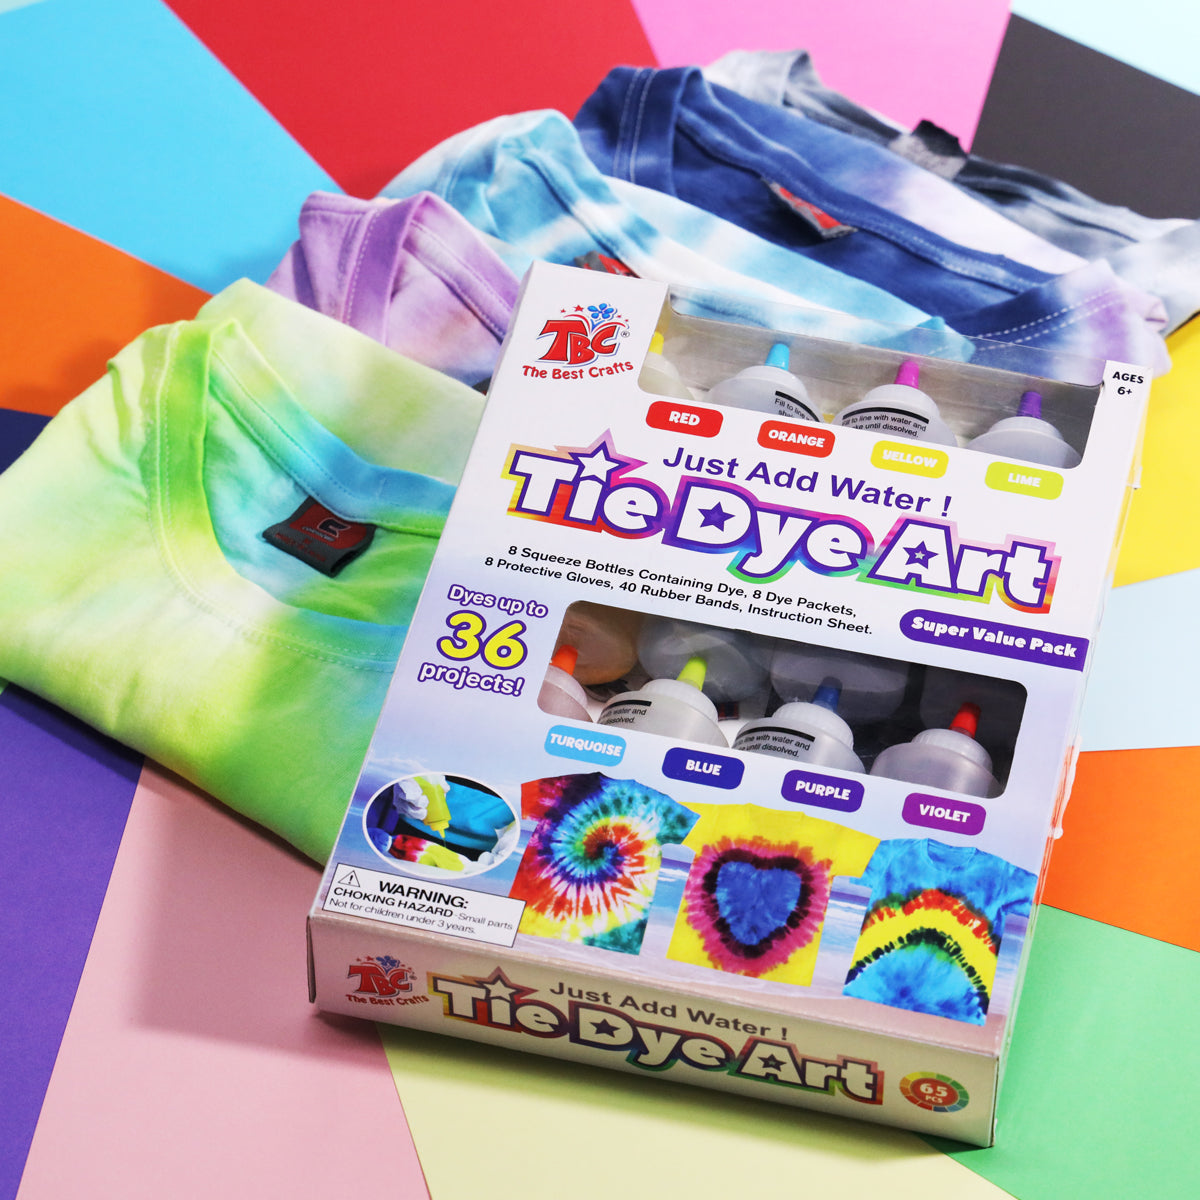 8 Colours Tie Dye Kit With Bonus Tie Dye Powder Refiils Packs ·Wholesa –  WingArt